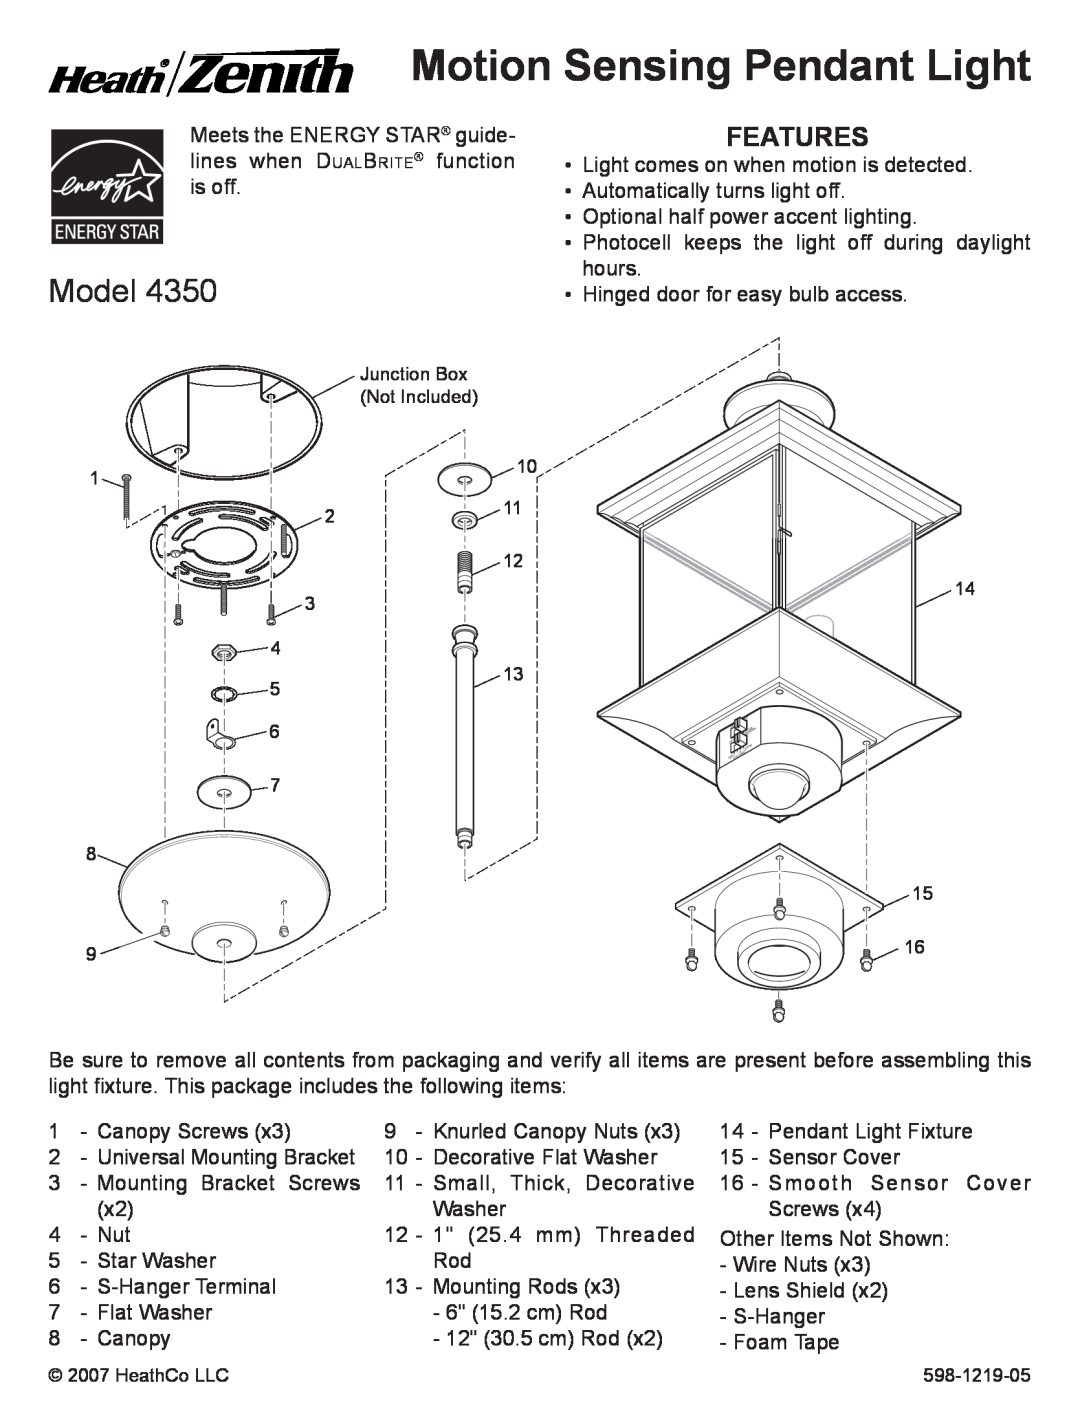 Heath Zenith 4350 manual Motion Sensing Pendant Light, Model, Features 